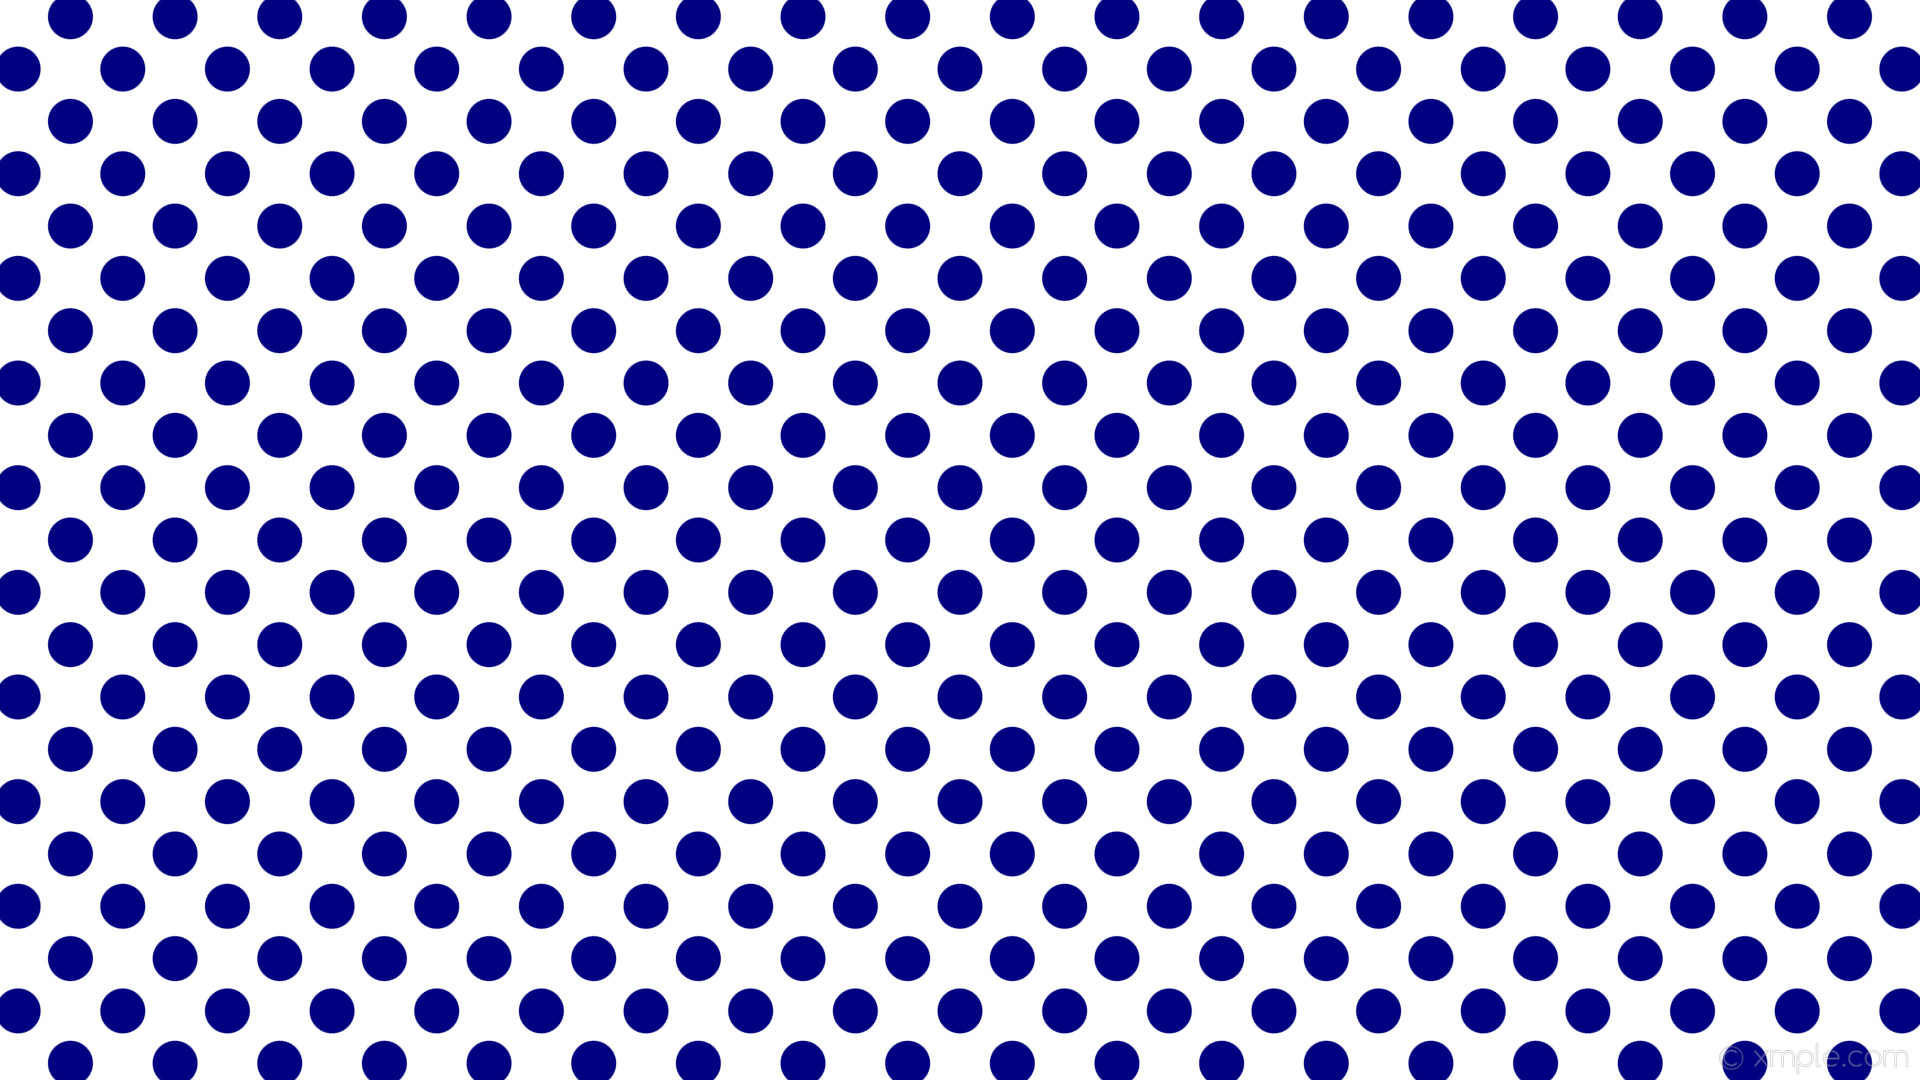 1920x1080 wallpaper dots white blue spots polka navy #ffffff #000080 45Â° 45px 74px